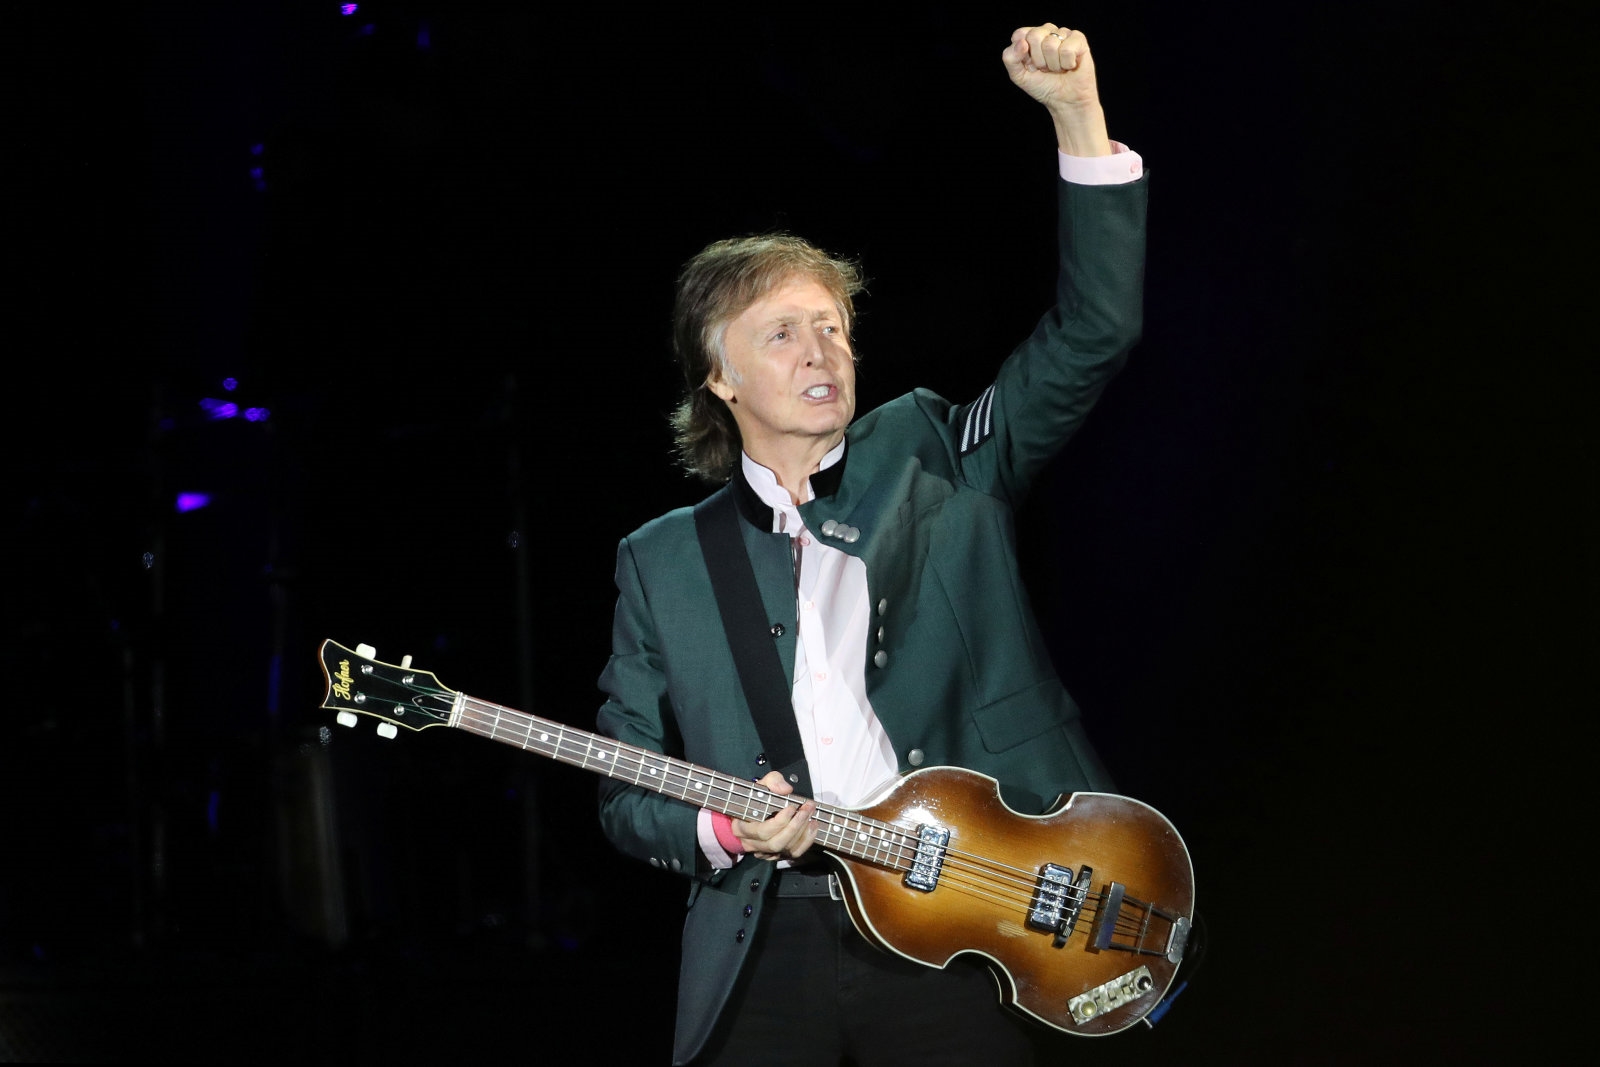 Paul McCartney will play a YouTube concert on September 7th | DeviceDaily.com